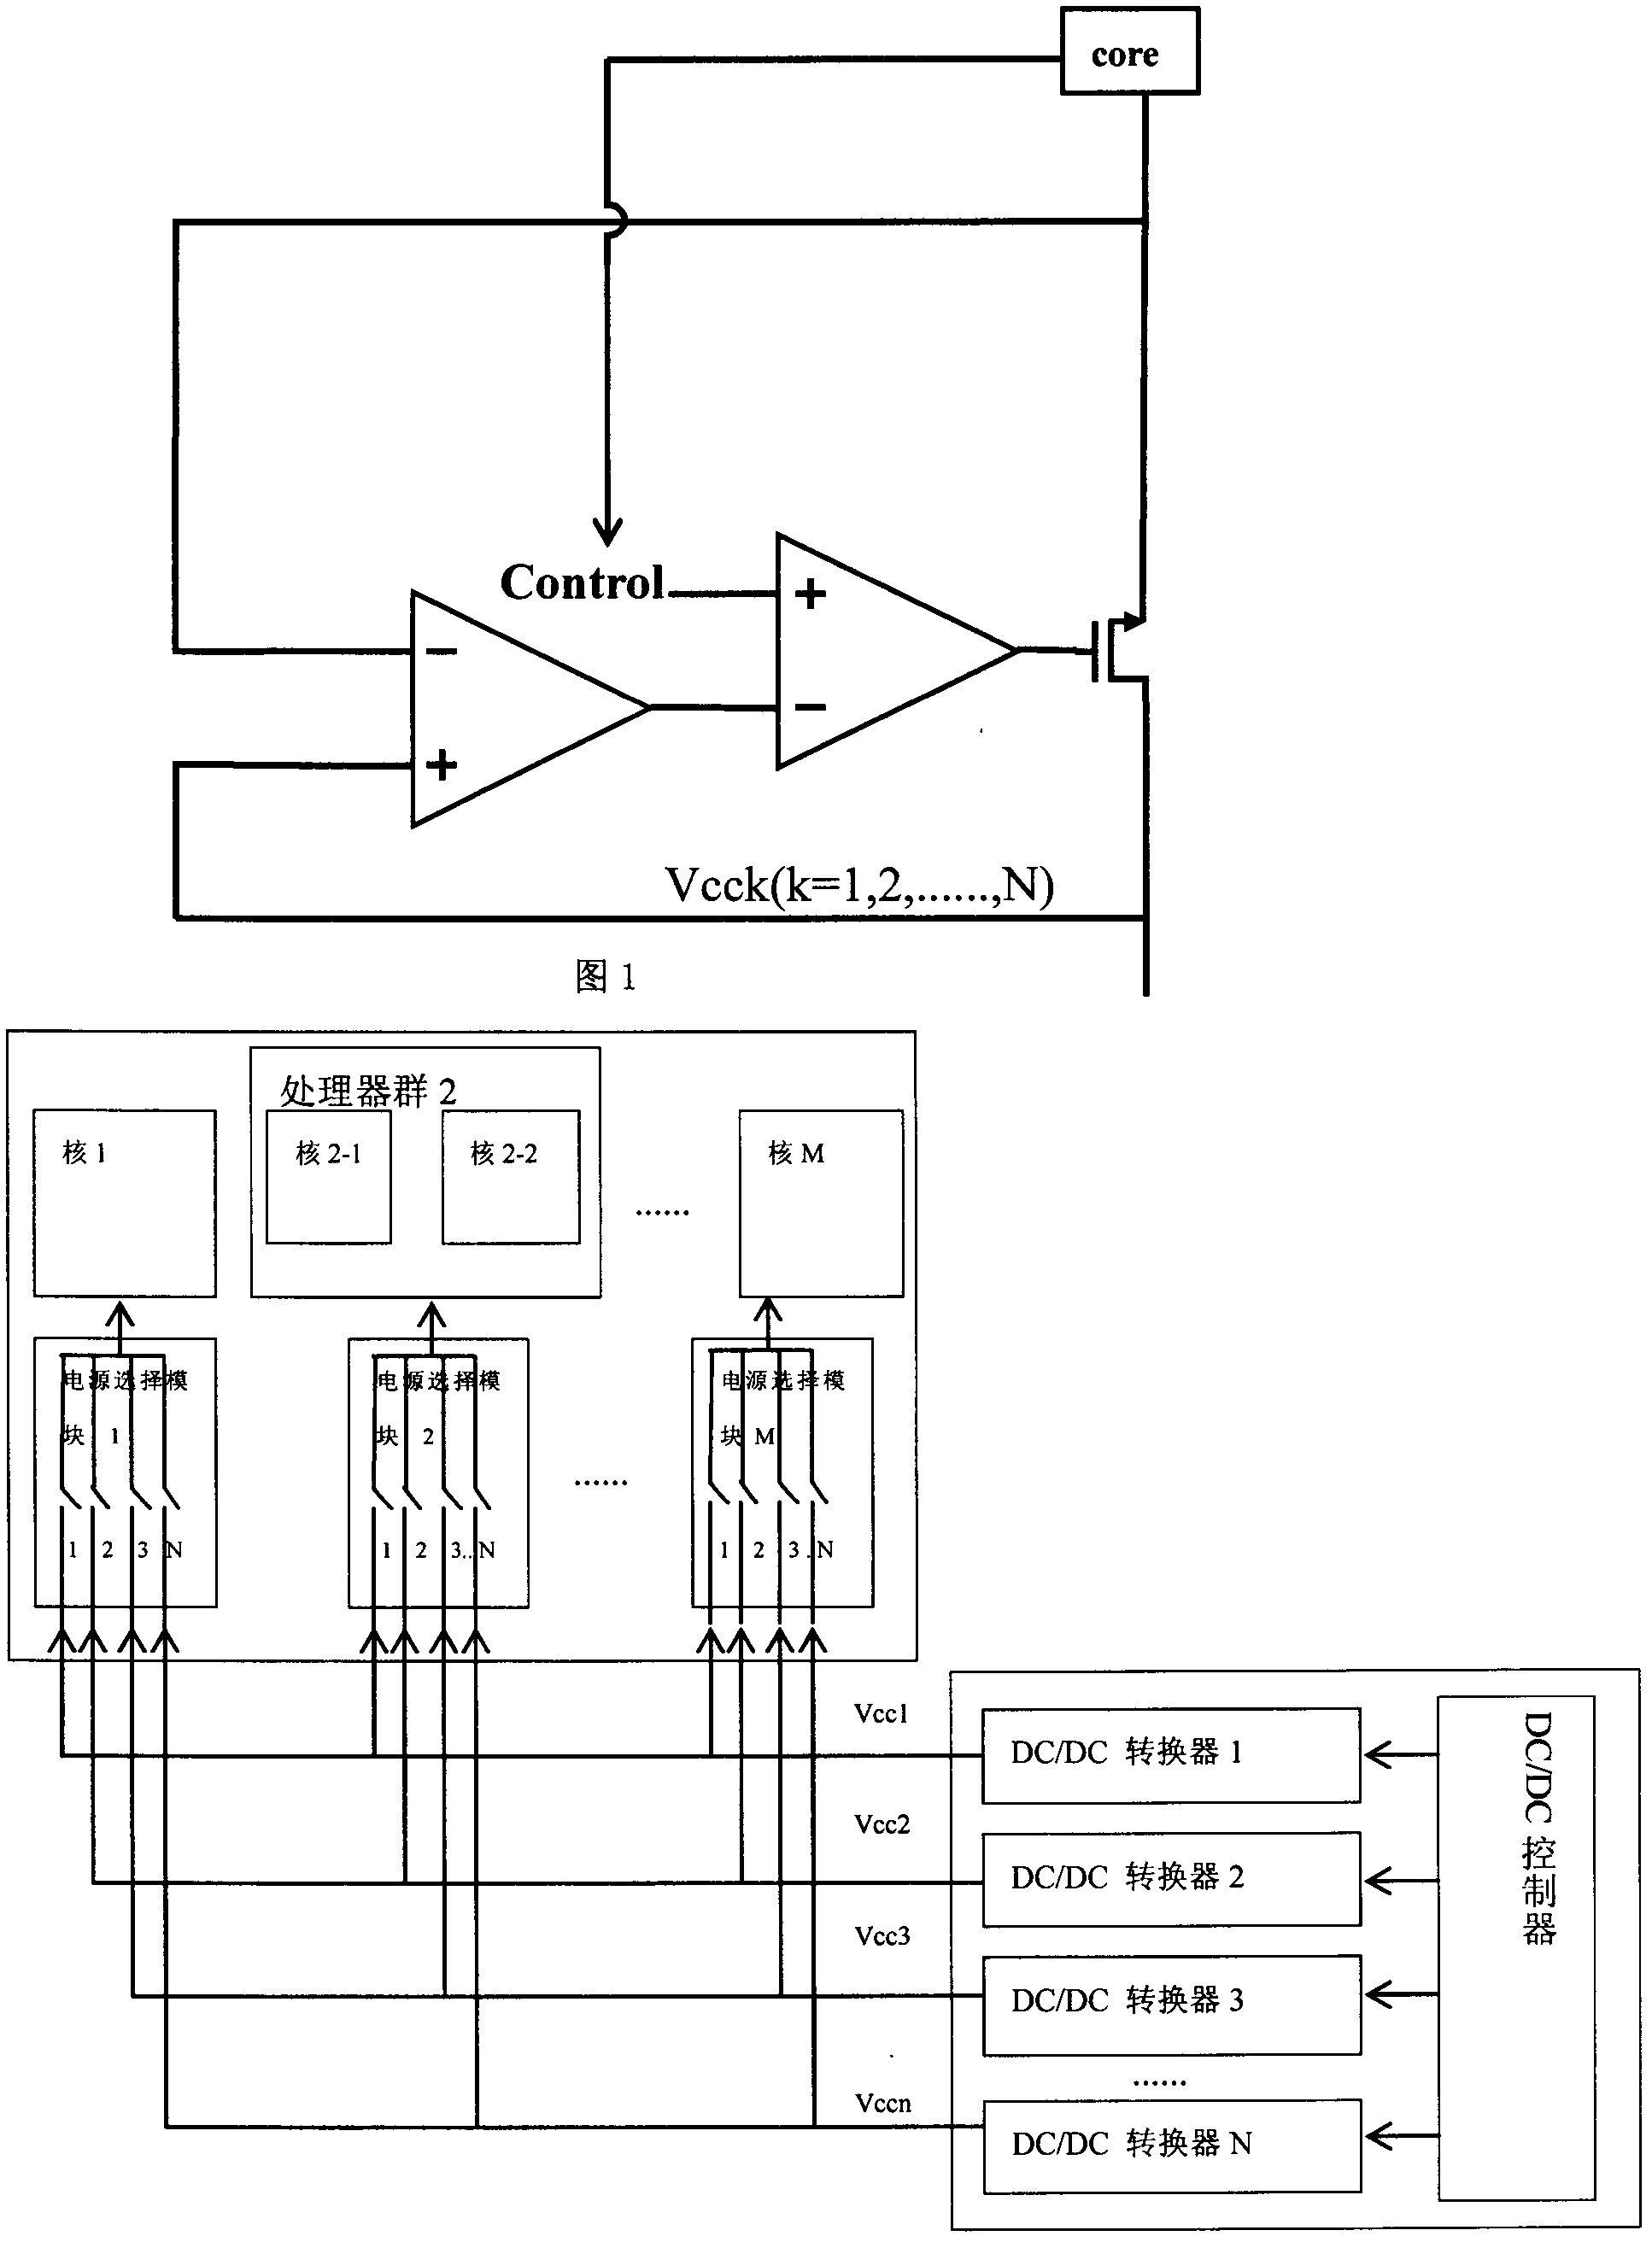 Power management circuit of multi-core processor